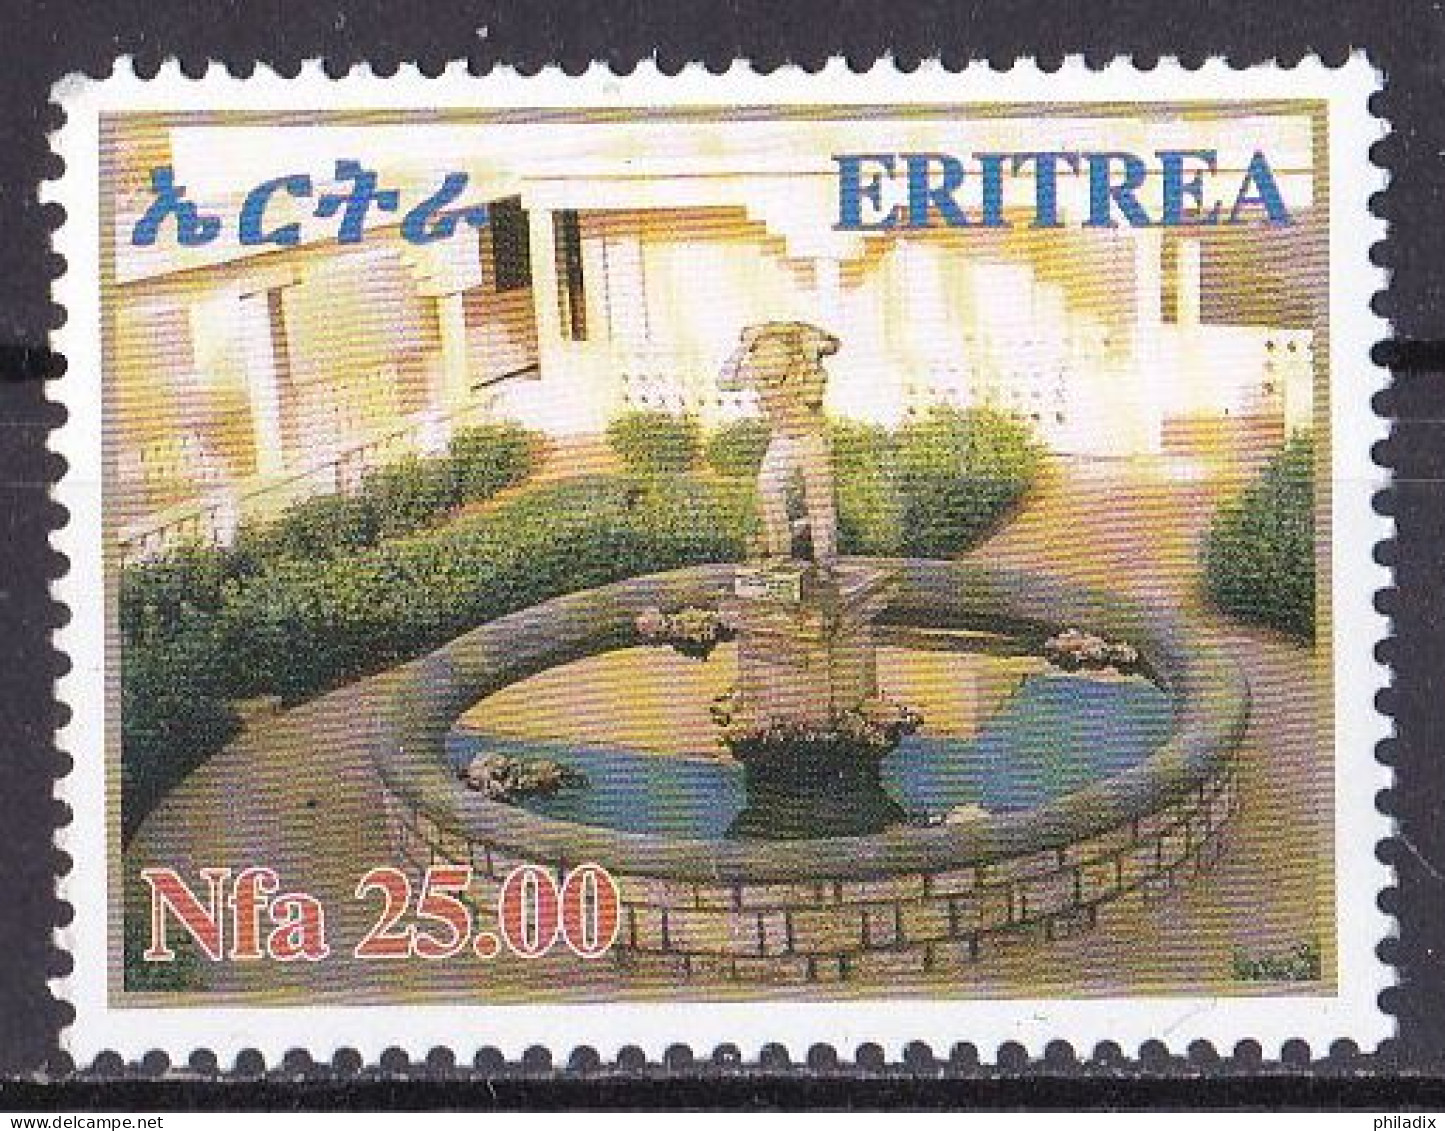 Eritrea Marke Von 2006 **/MNH (A5-10) - Eritrea